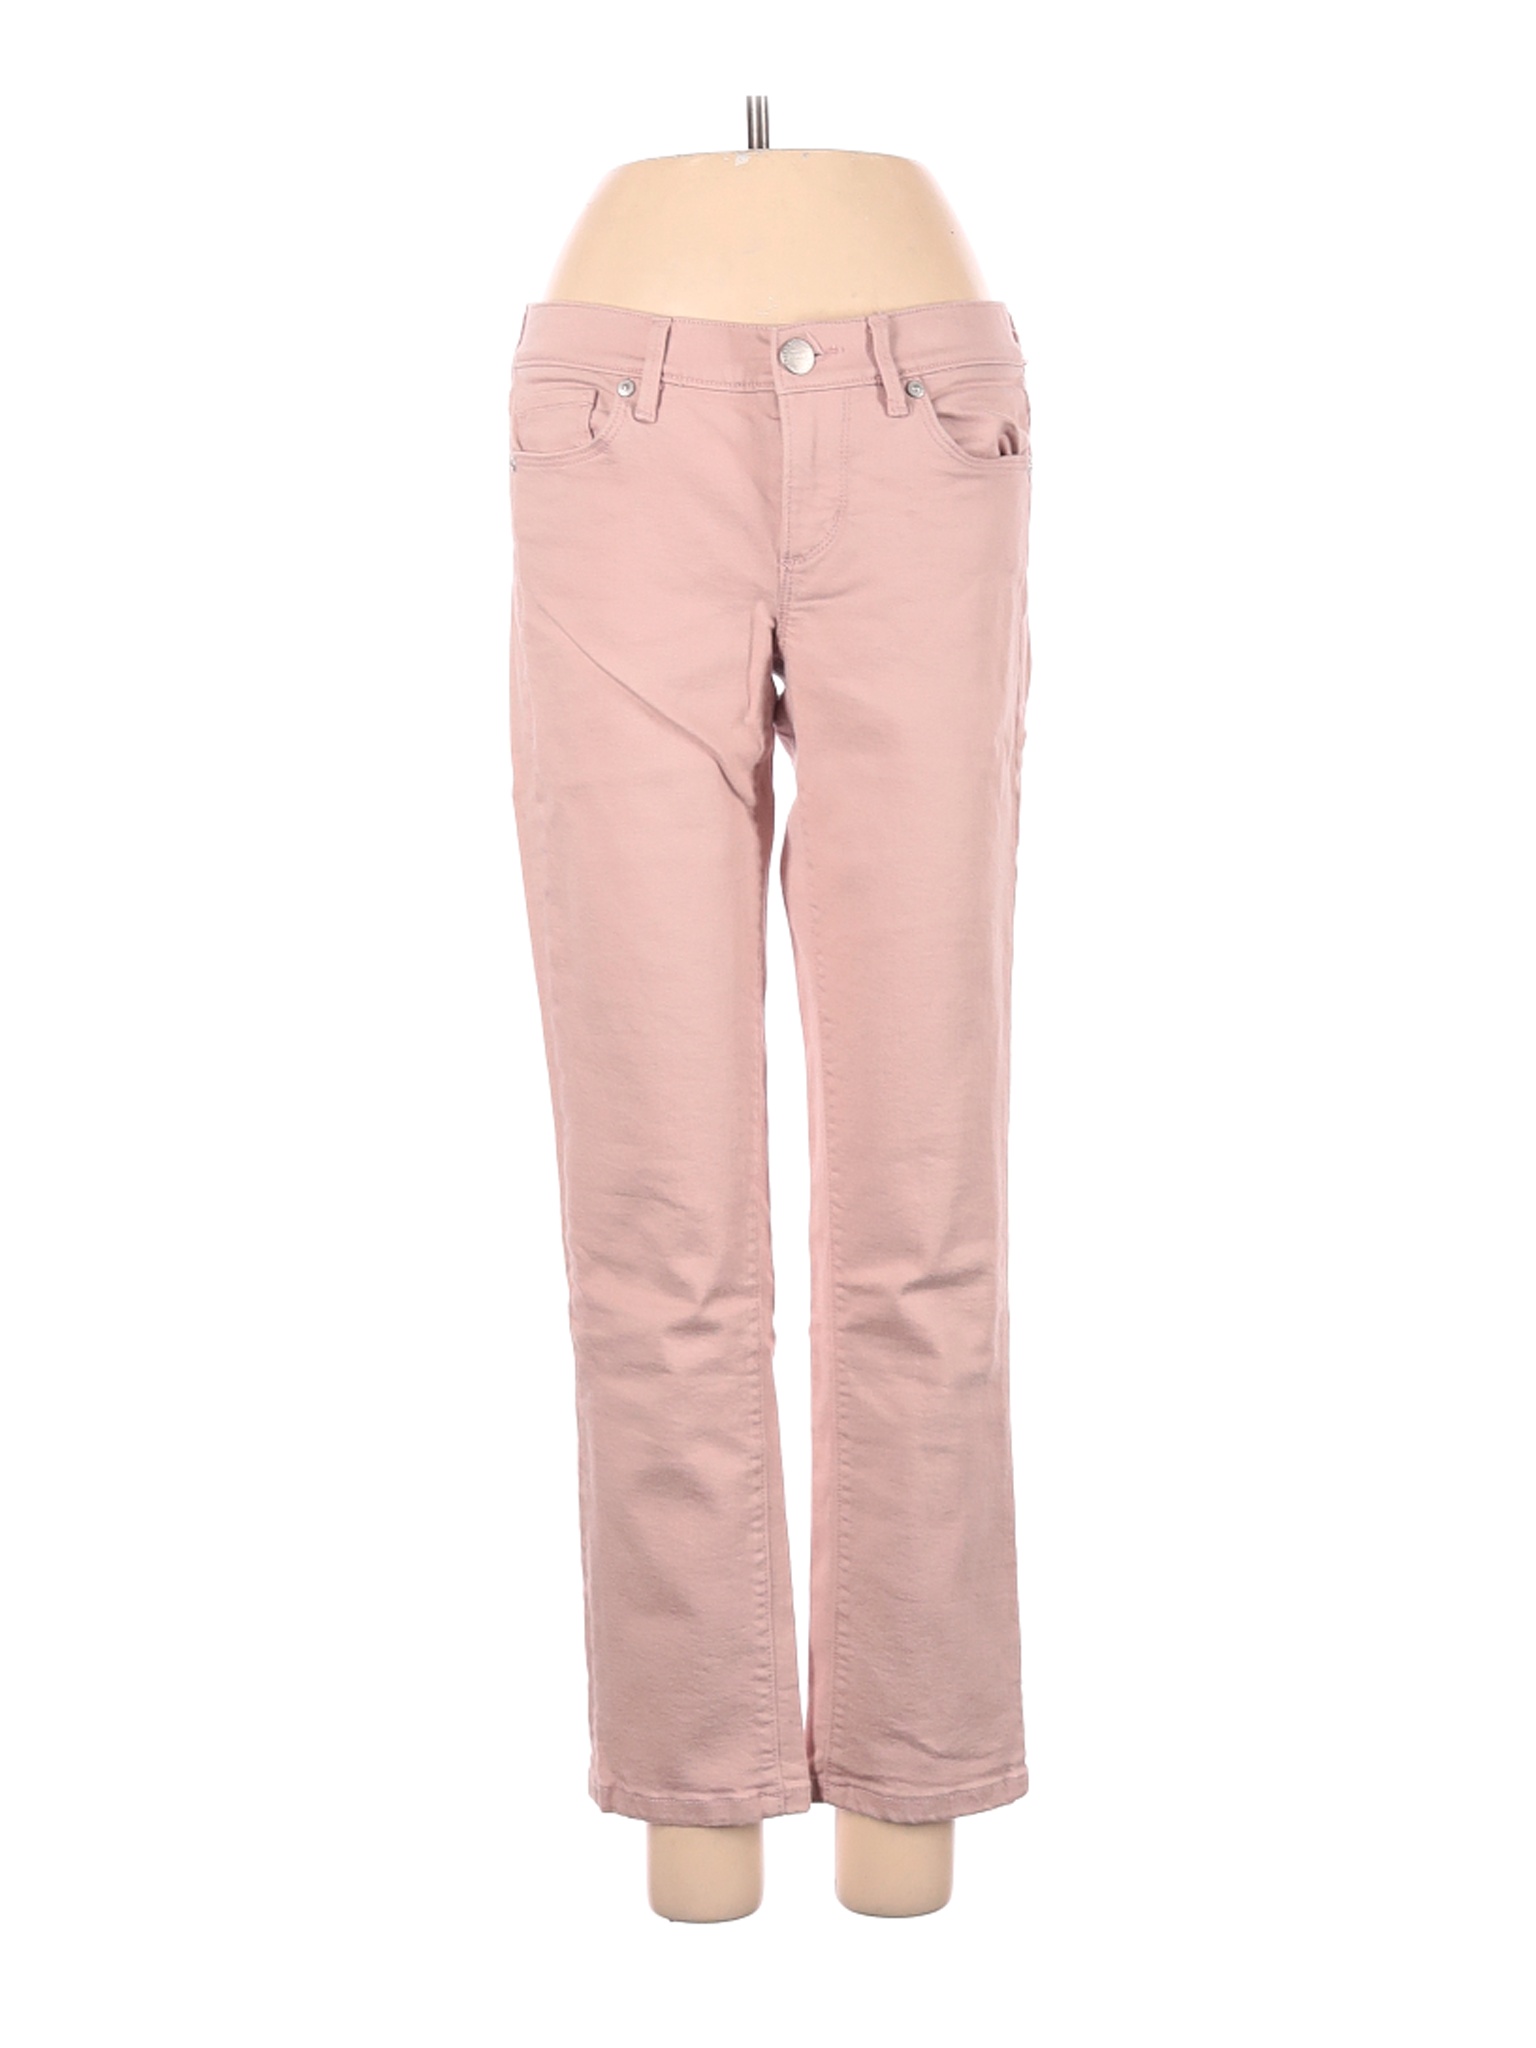 Ann Taylor LOFT Outlet Women Pink Jeans 0 Petites | eBay